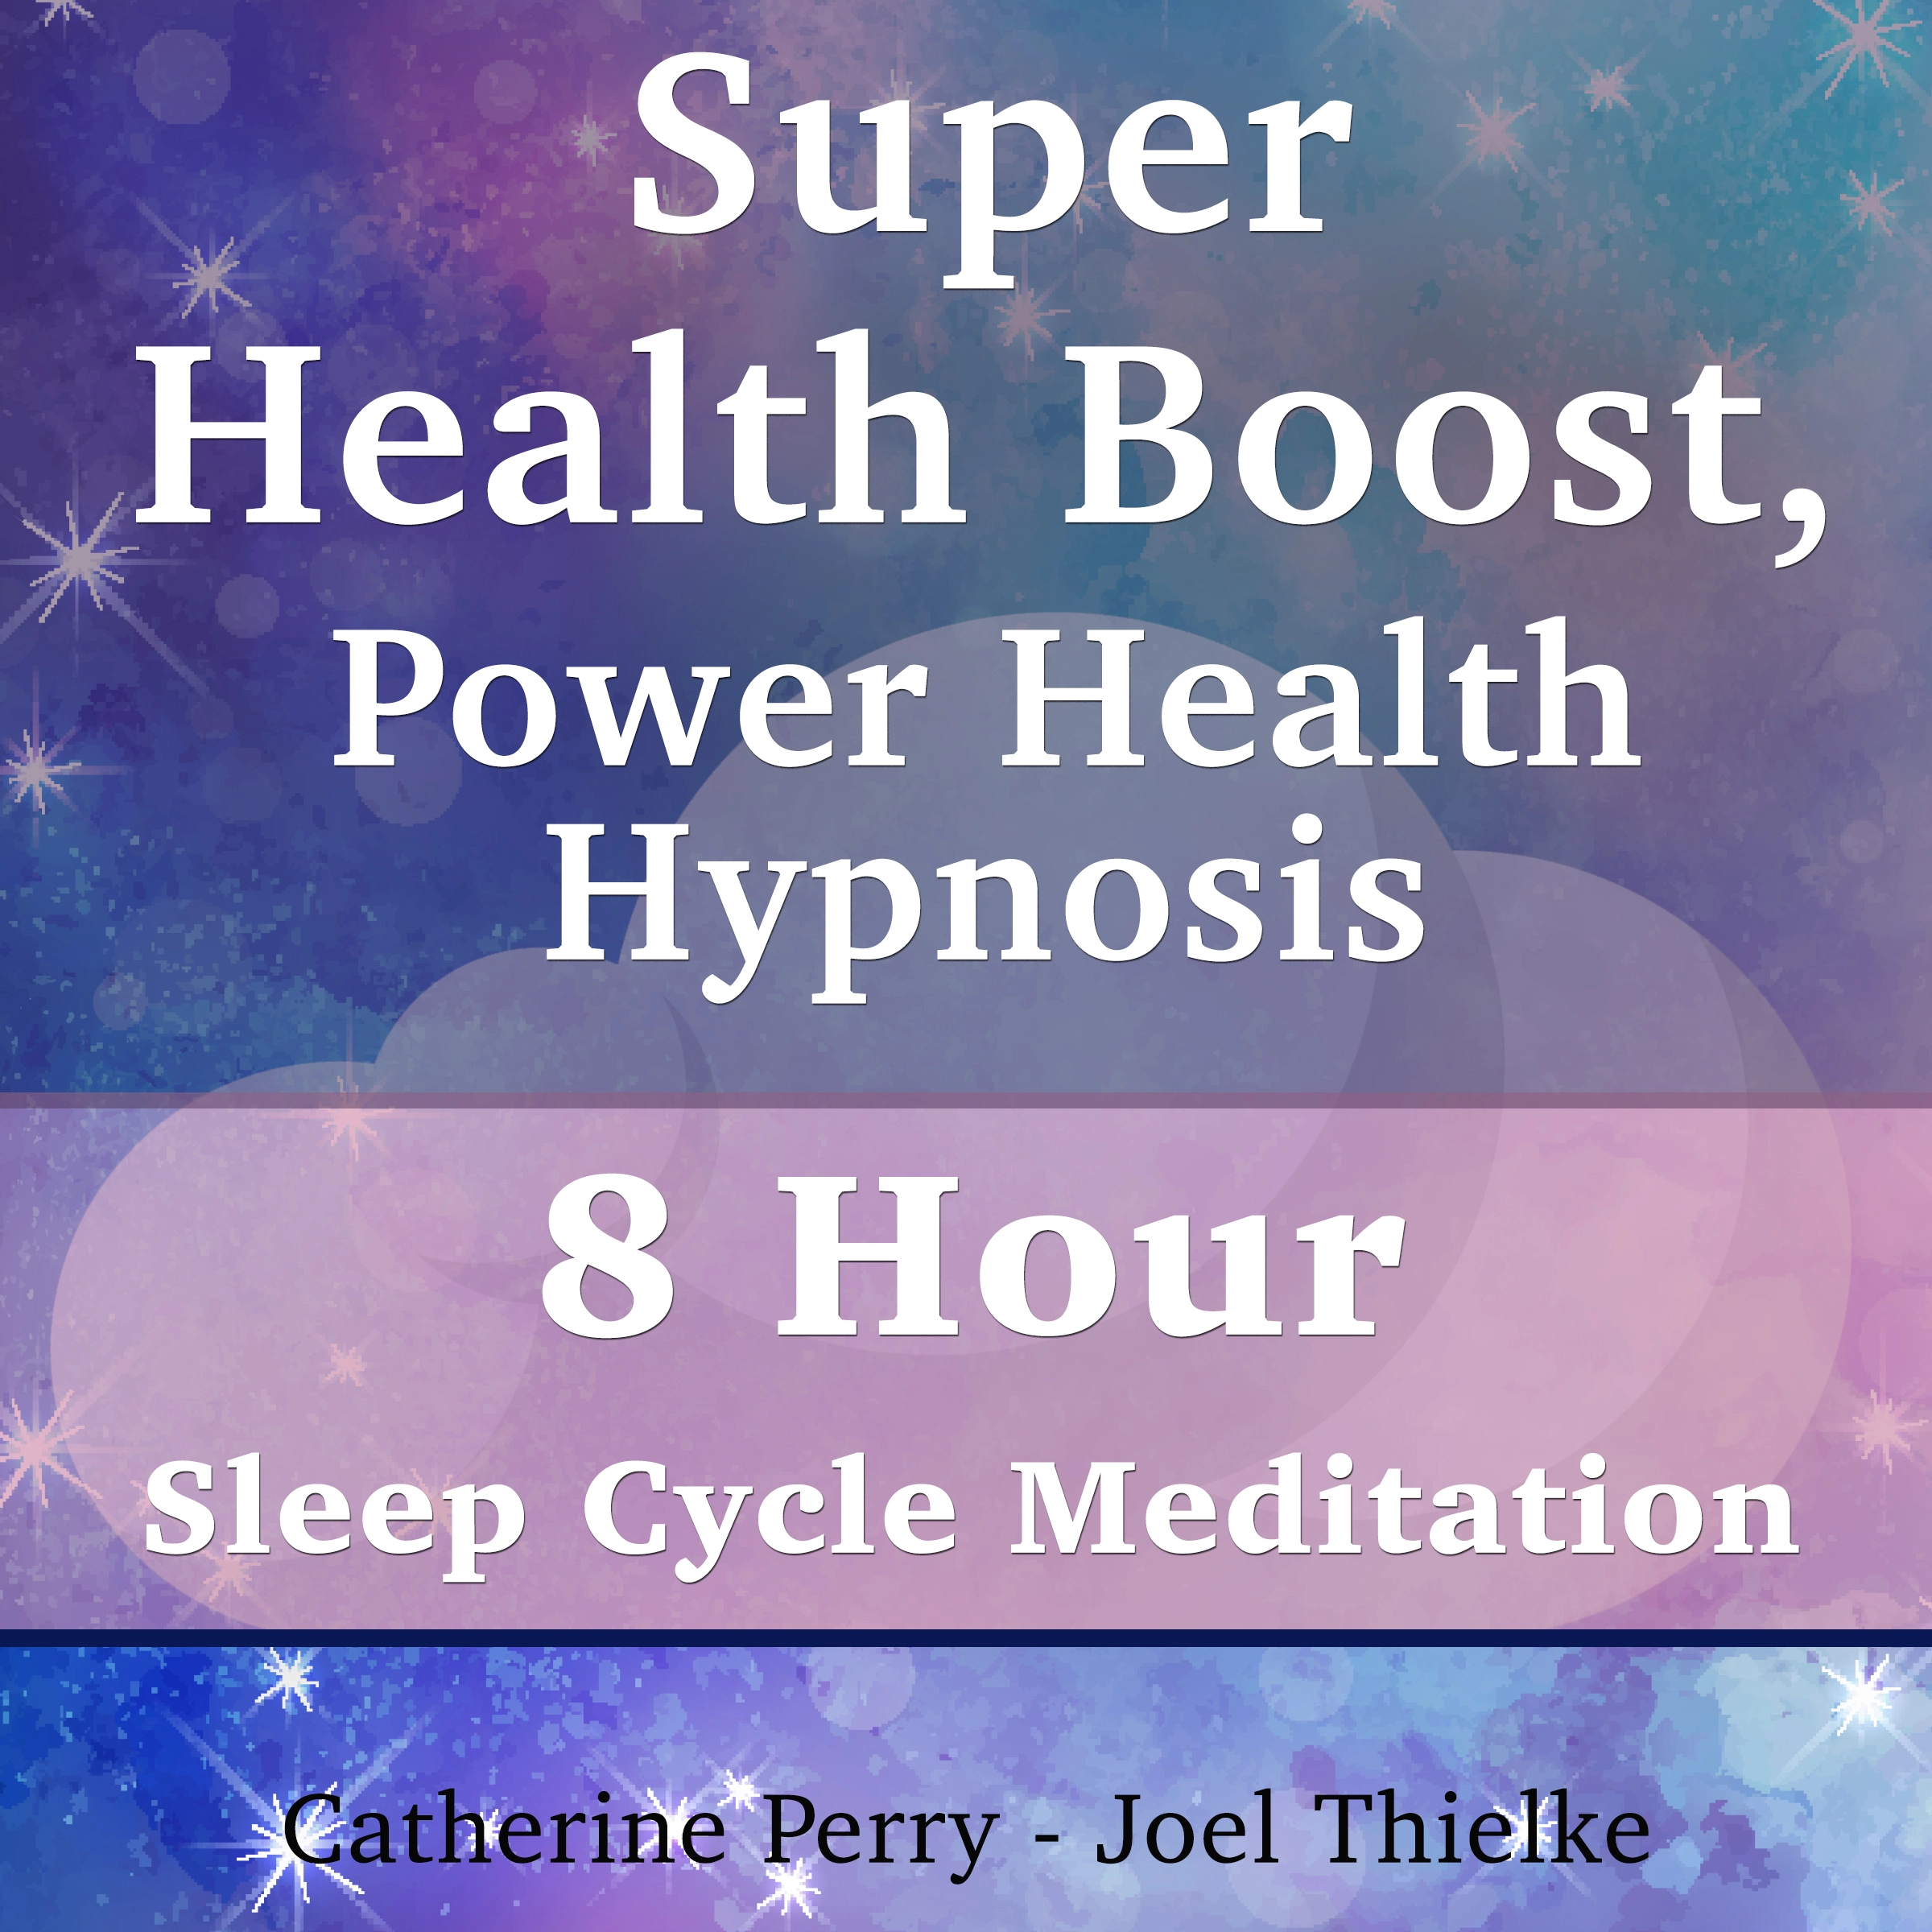 Super Health Boost, Power Health Hypnosis: 8 Hour Sleep Cycle Meditation Audiobook by Joel Thielke